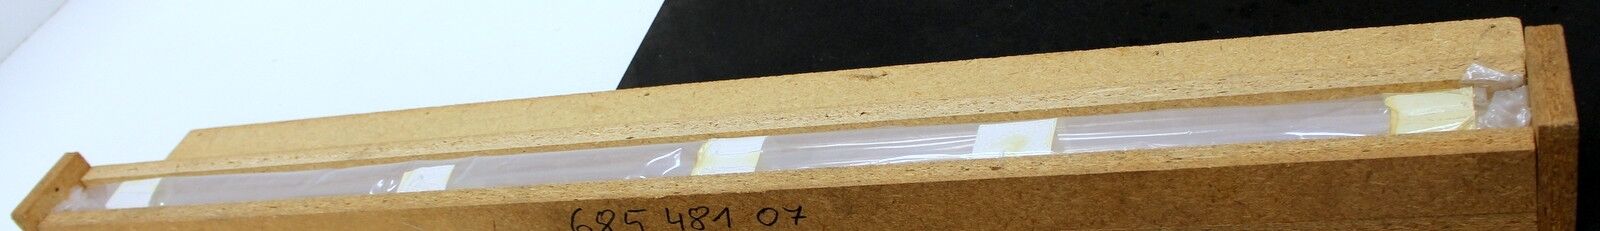 Plexiglasrohr 20mm äusserer Durchmesser x 670 mm Lang - Wandstärke 2mm - 2 Stück